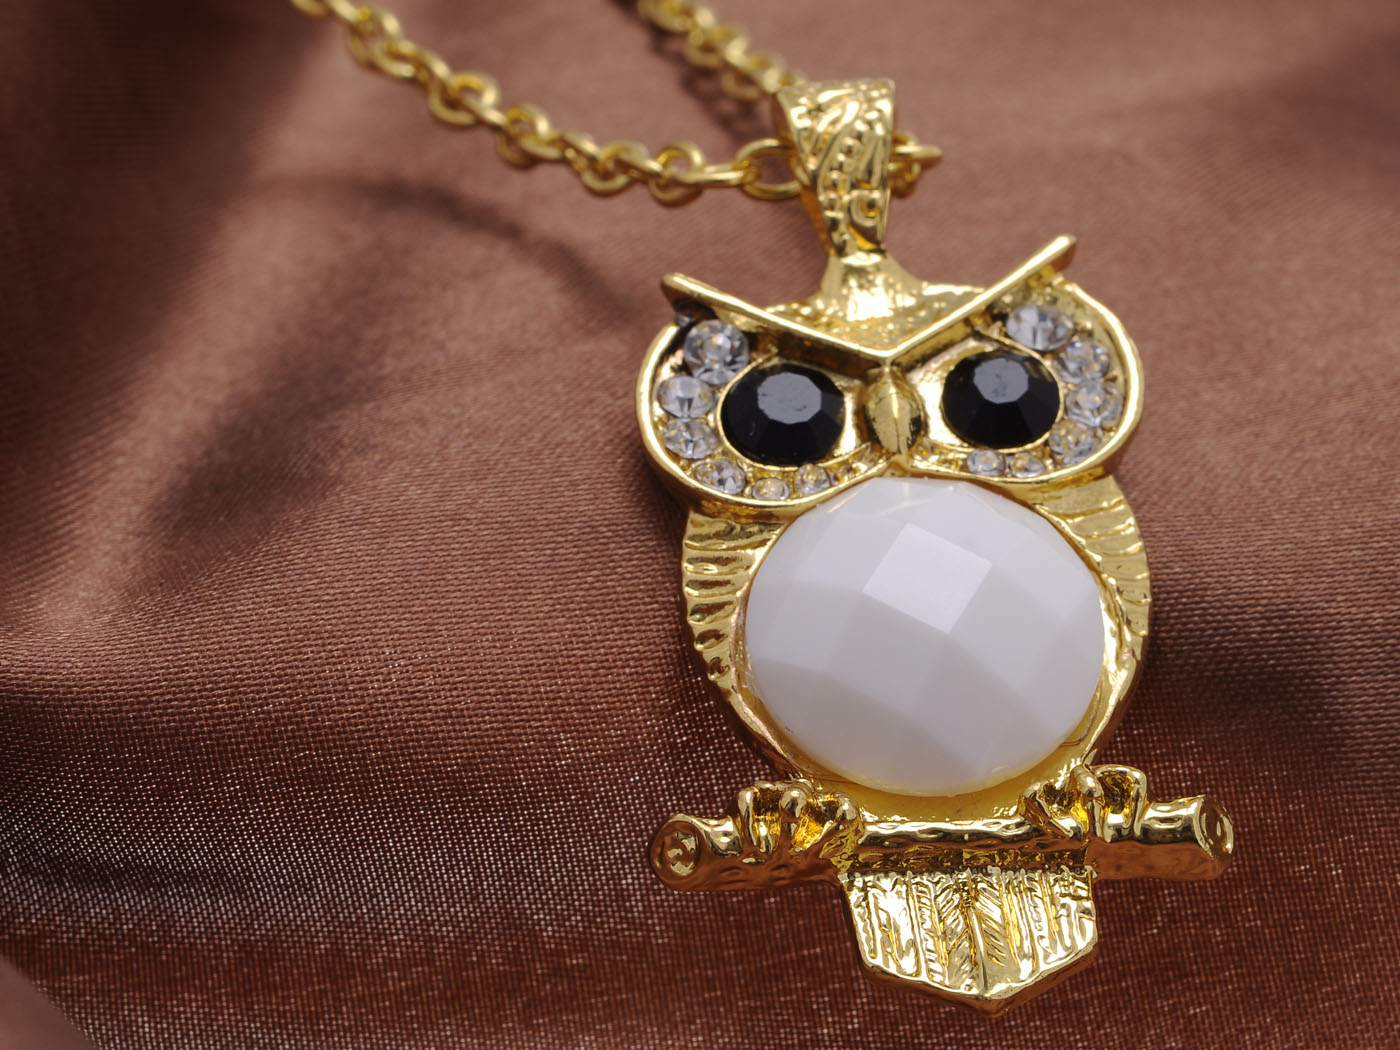 Big Black Eyed White Belly Owl Necklace